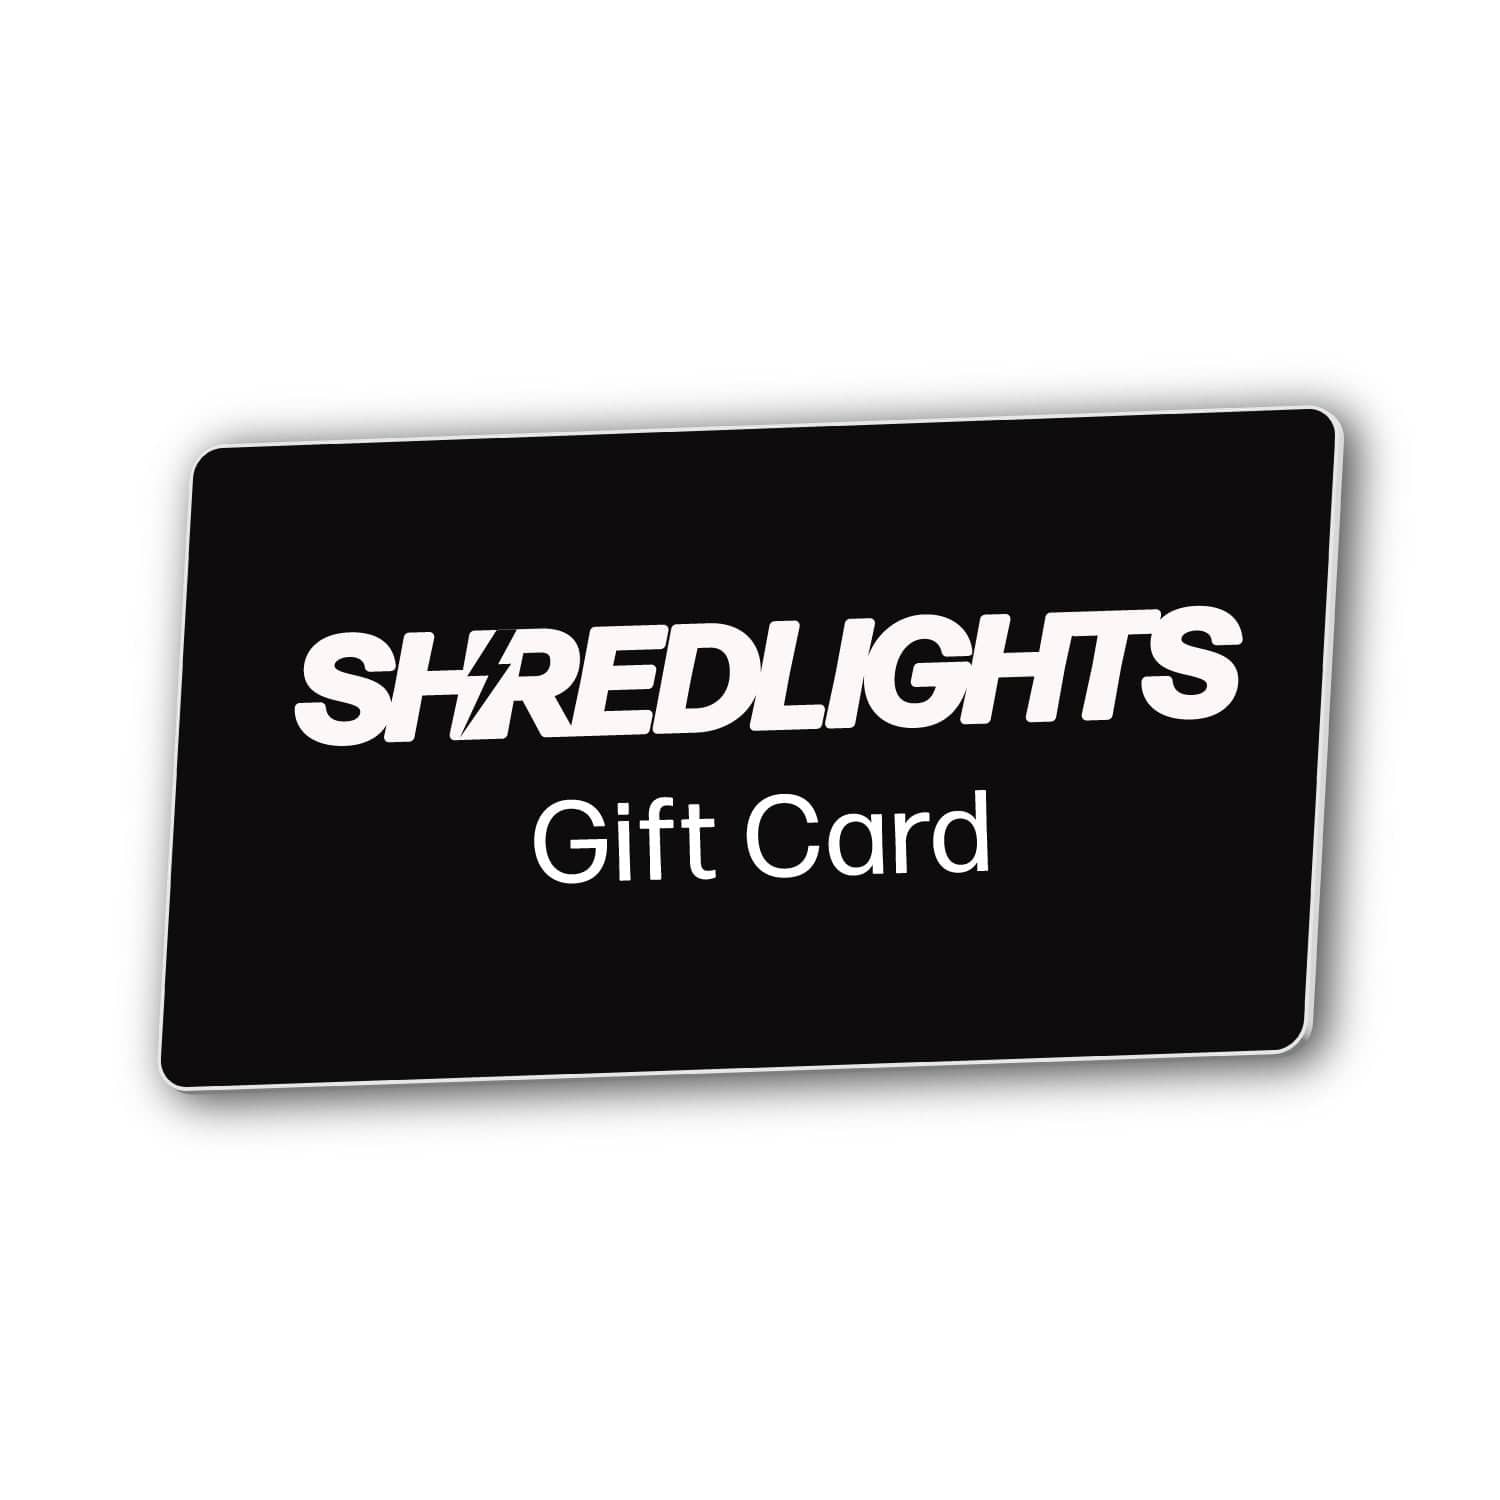 ShredLights Gift Card